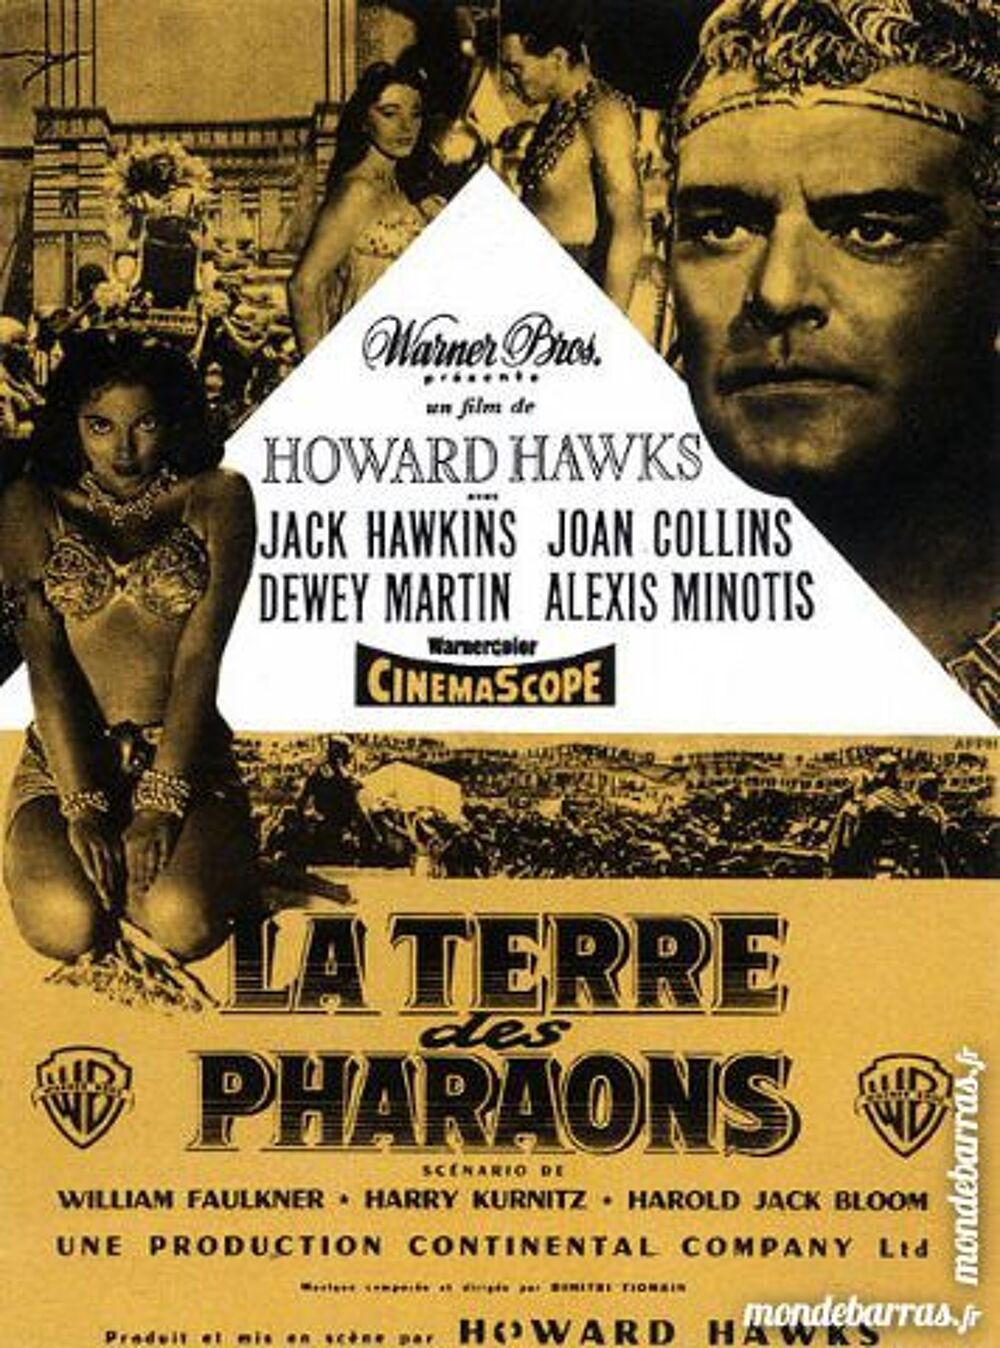 Dvd: La Terre des pharaons (242) DVD et blu-ray